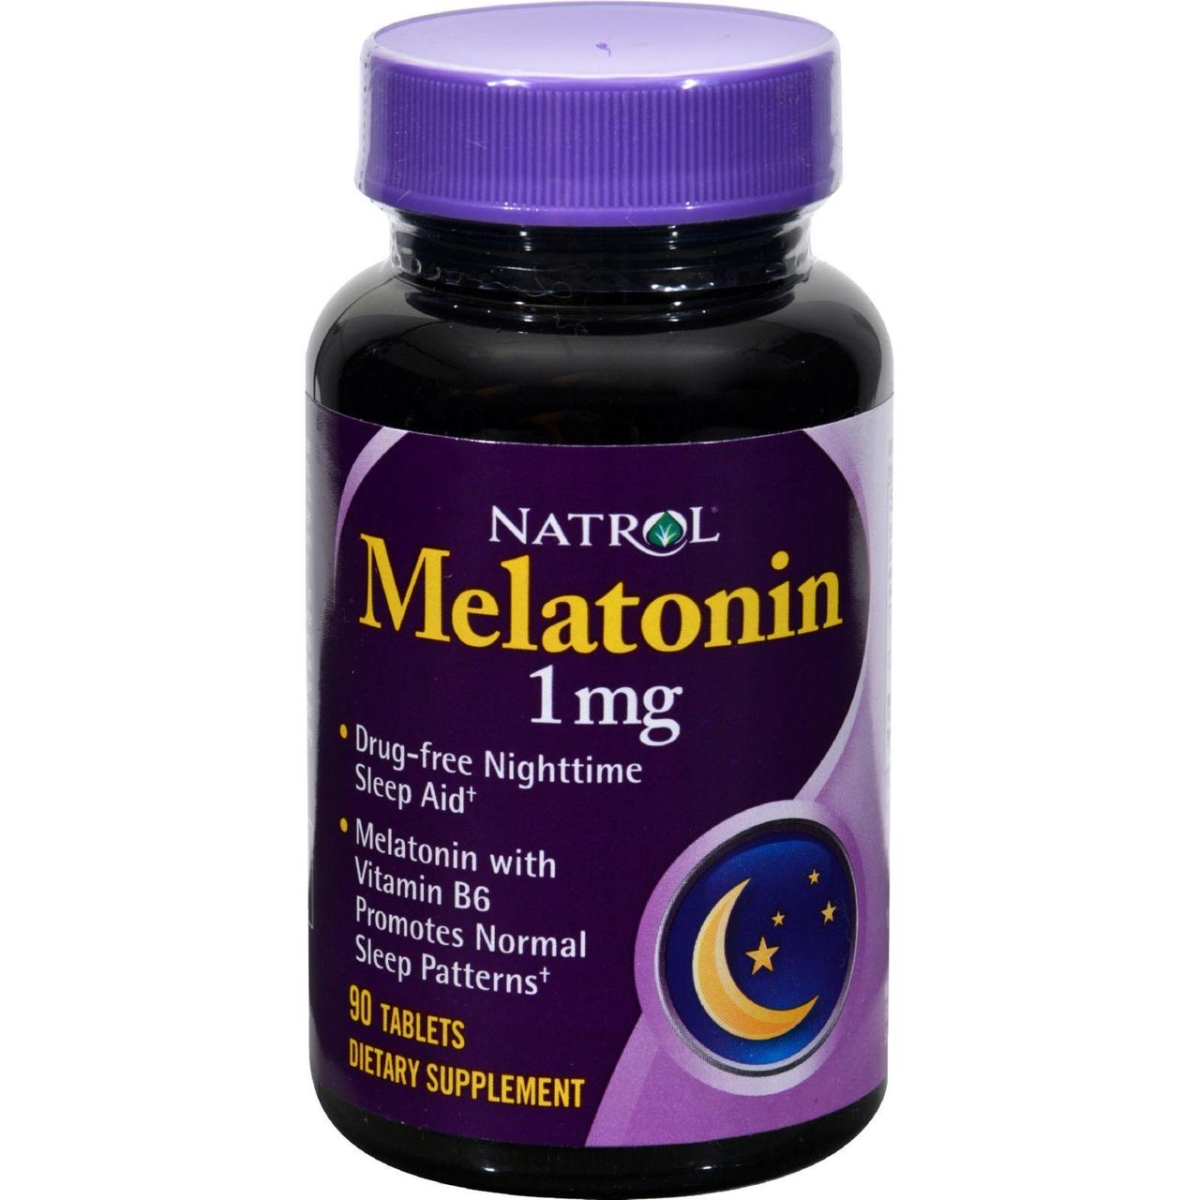 Picture of Natrol HG0432146 1 mg Melatonin - 90 Tablets